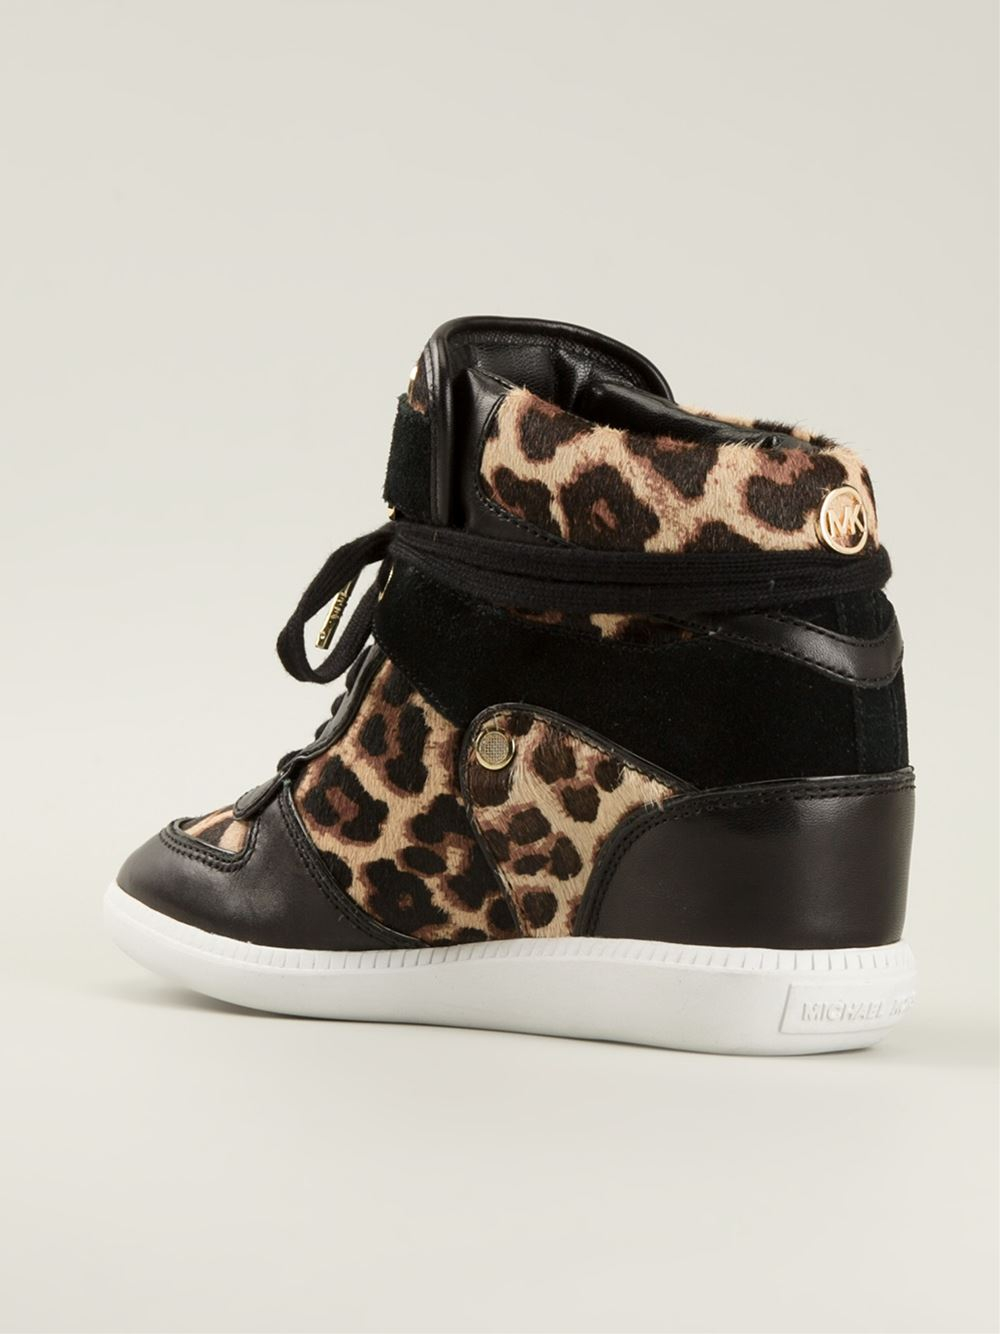 MICHAEL Kors AMANDA Leopard Calf Hair and Mesh Sneakers Shoes  Size 85   eBay